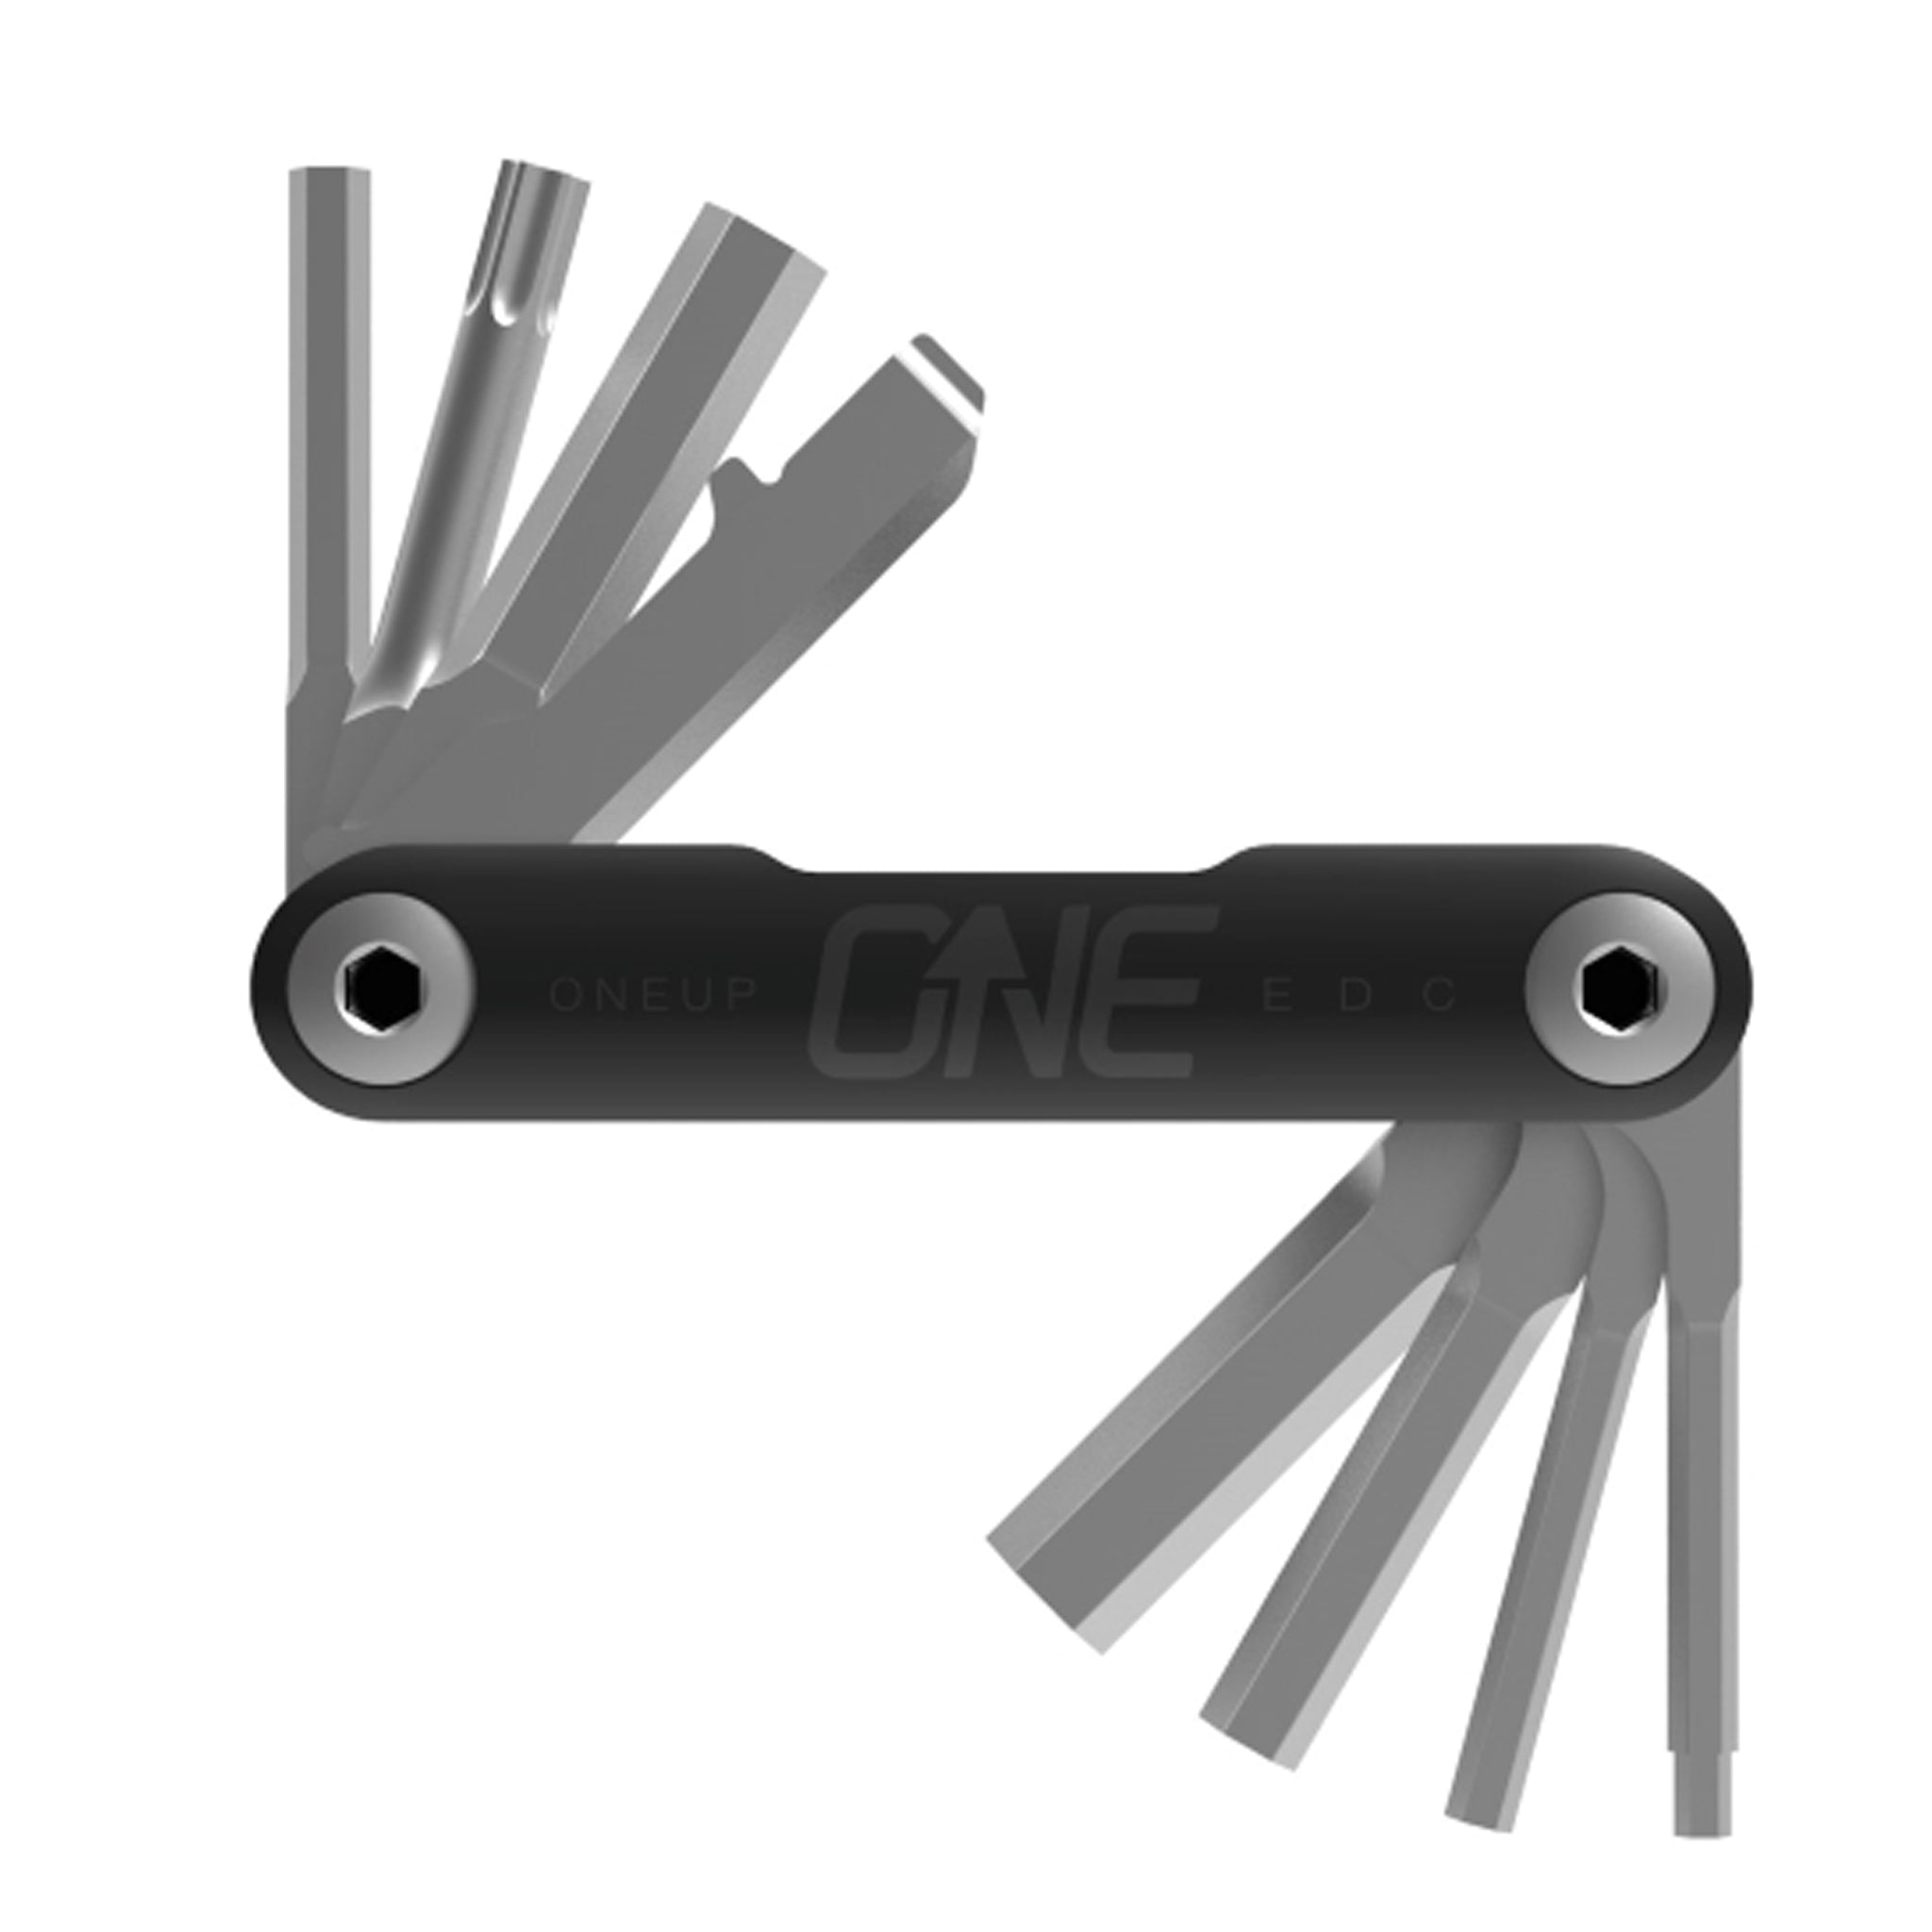 OneUp Components EDC Tool V2 Black